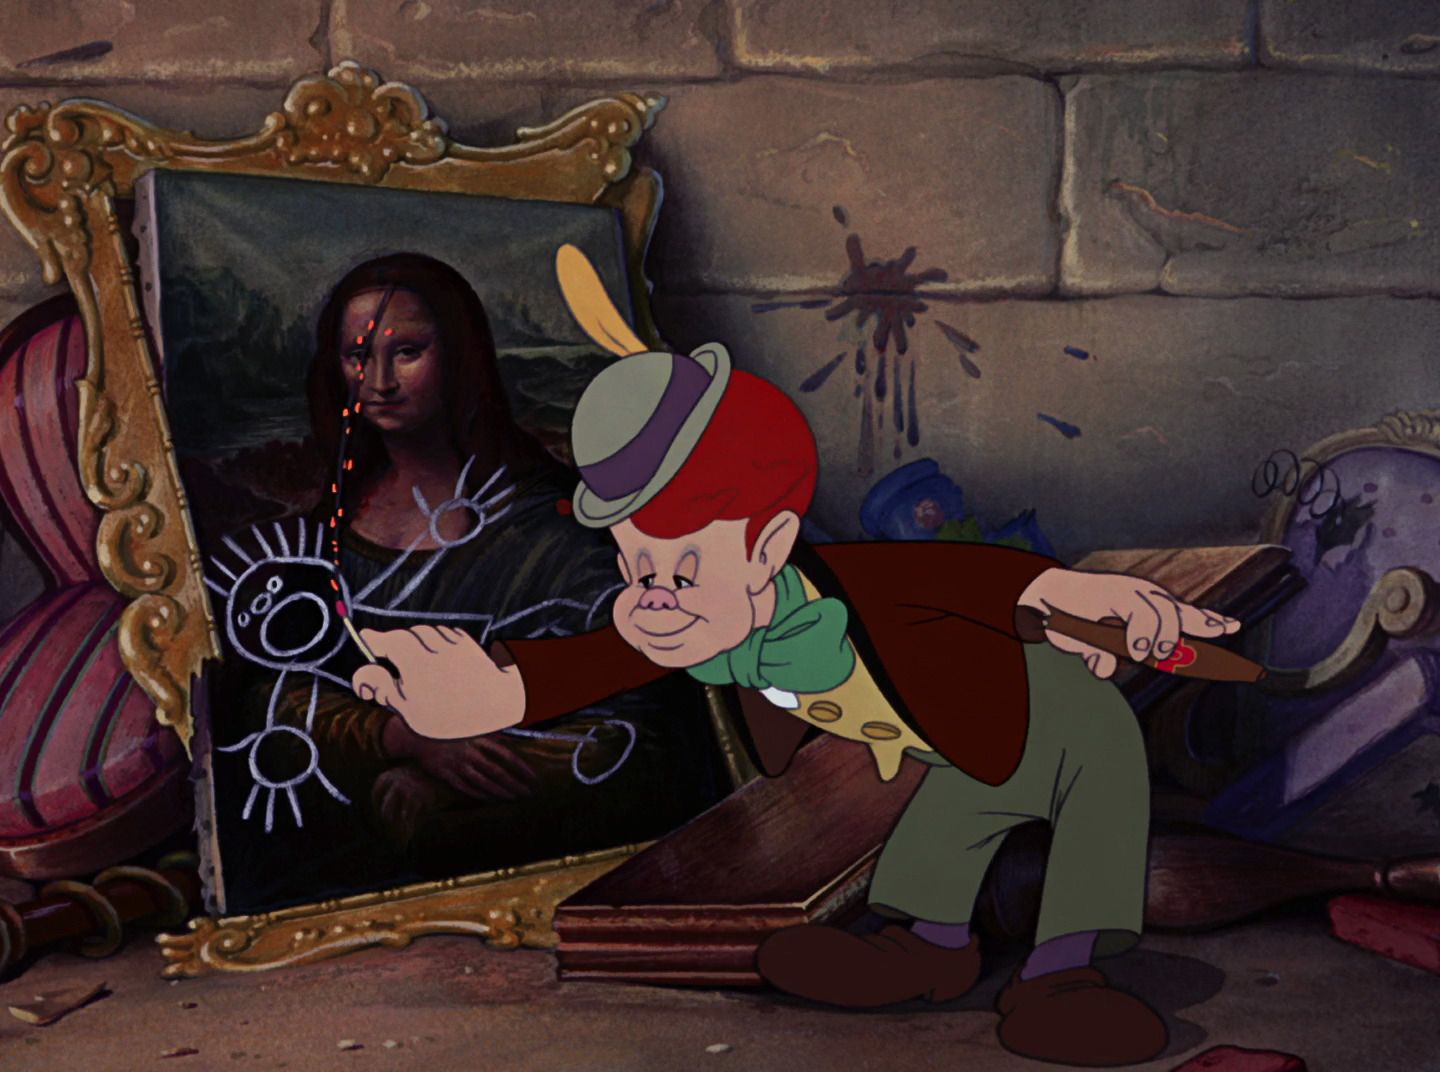 Pinocchio (1940) (With images) | Pinocchio, Disney animation ...